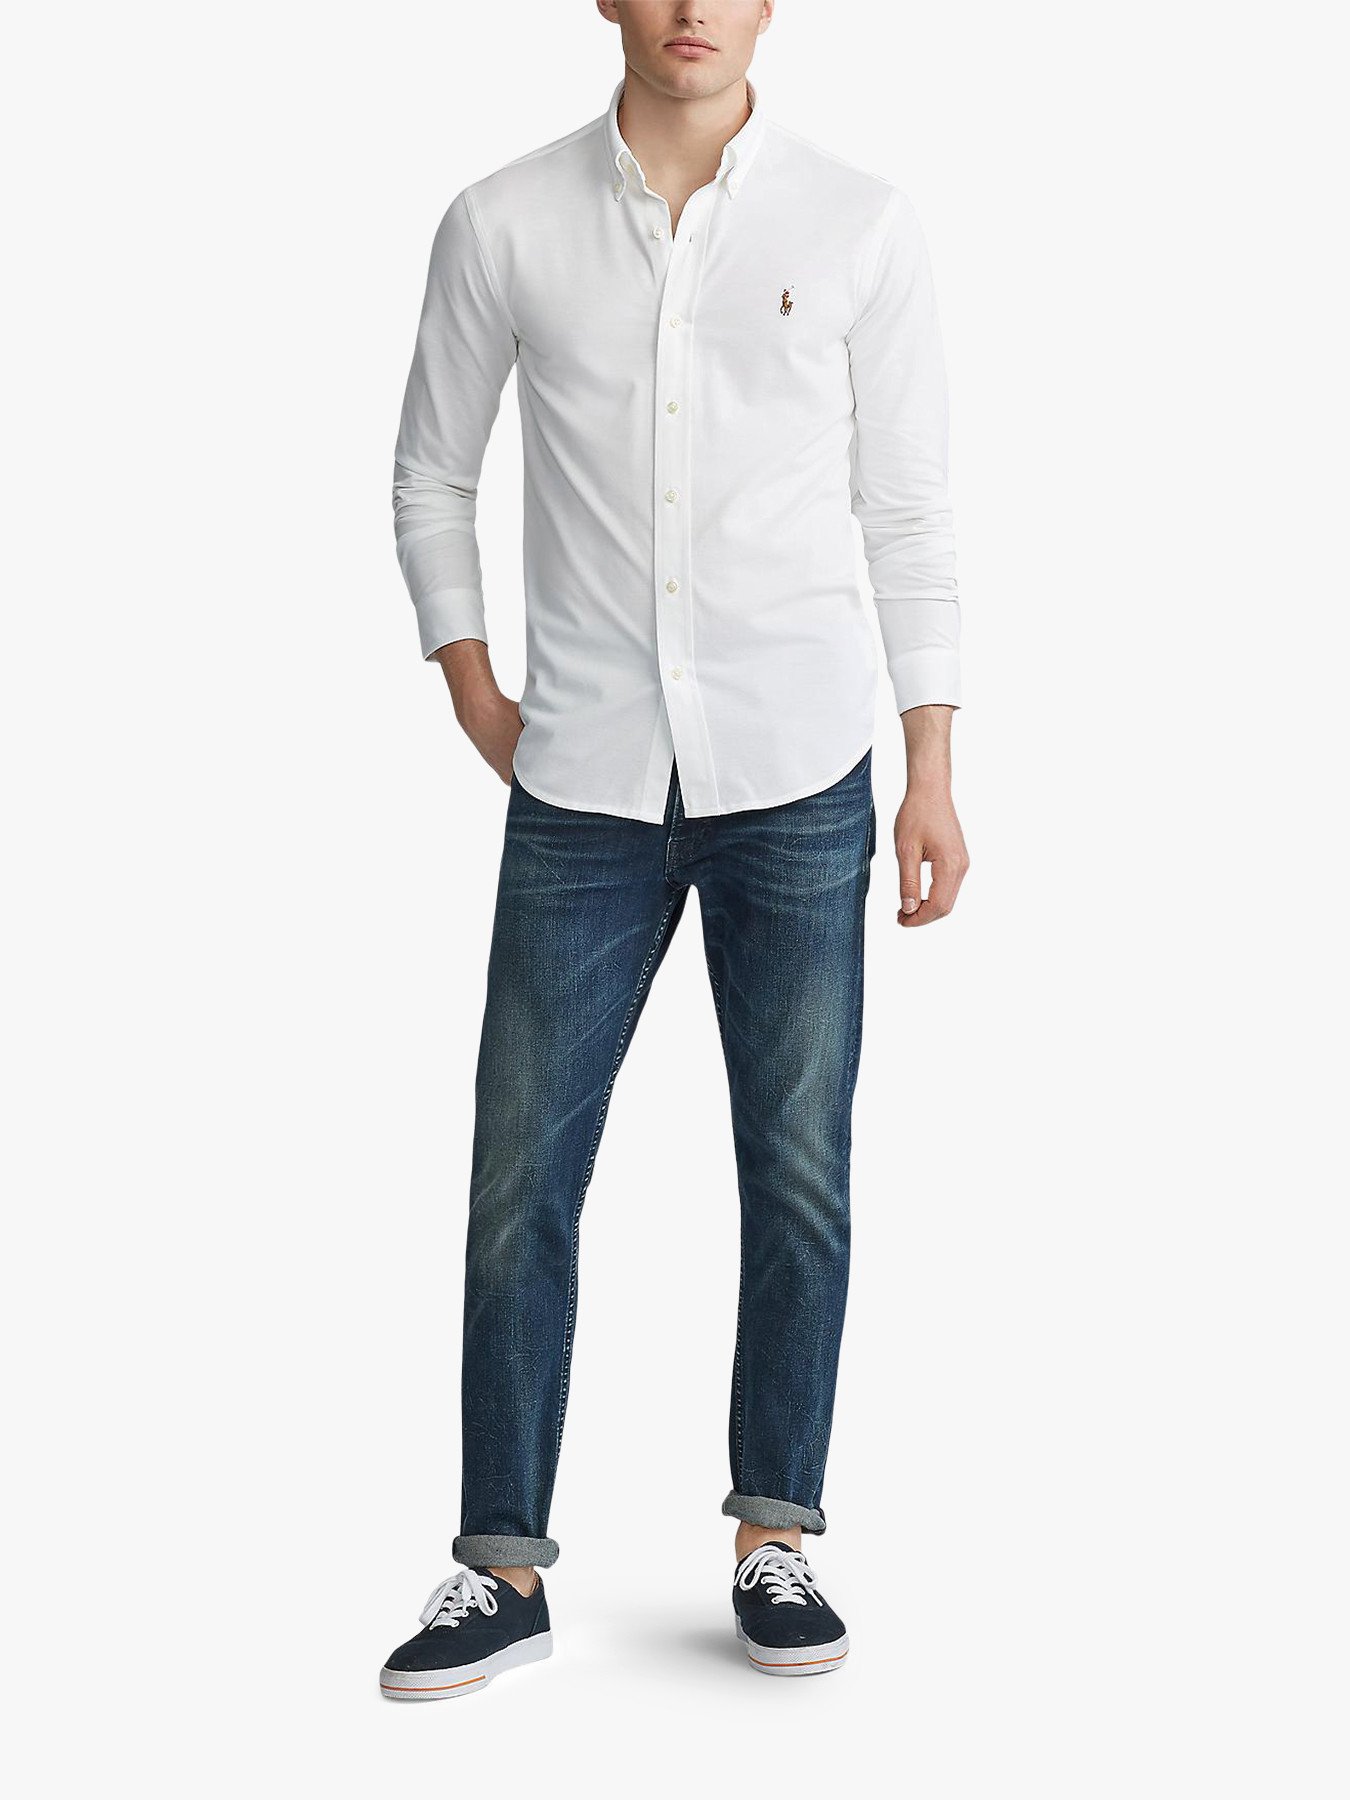 Men's Polo Ralph Lauren Slim Fit Pique Shirt | Fenwick